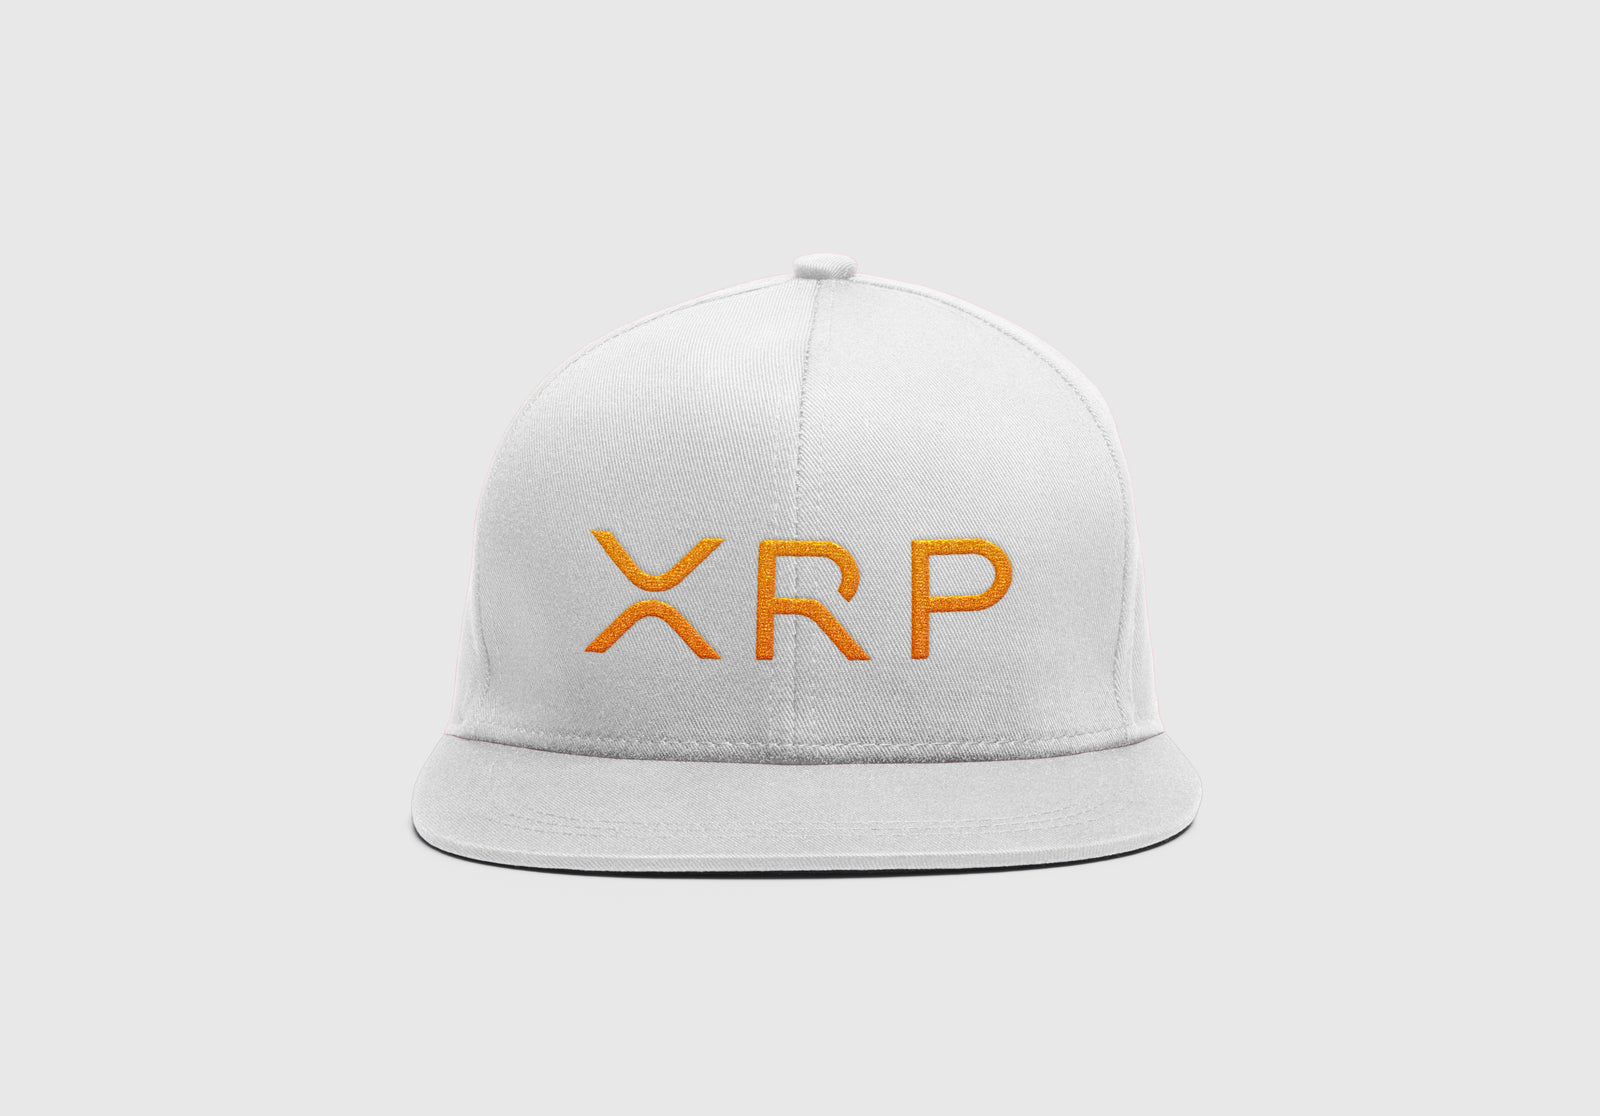 Full XRP Crypto Snapback Hat